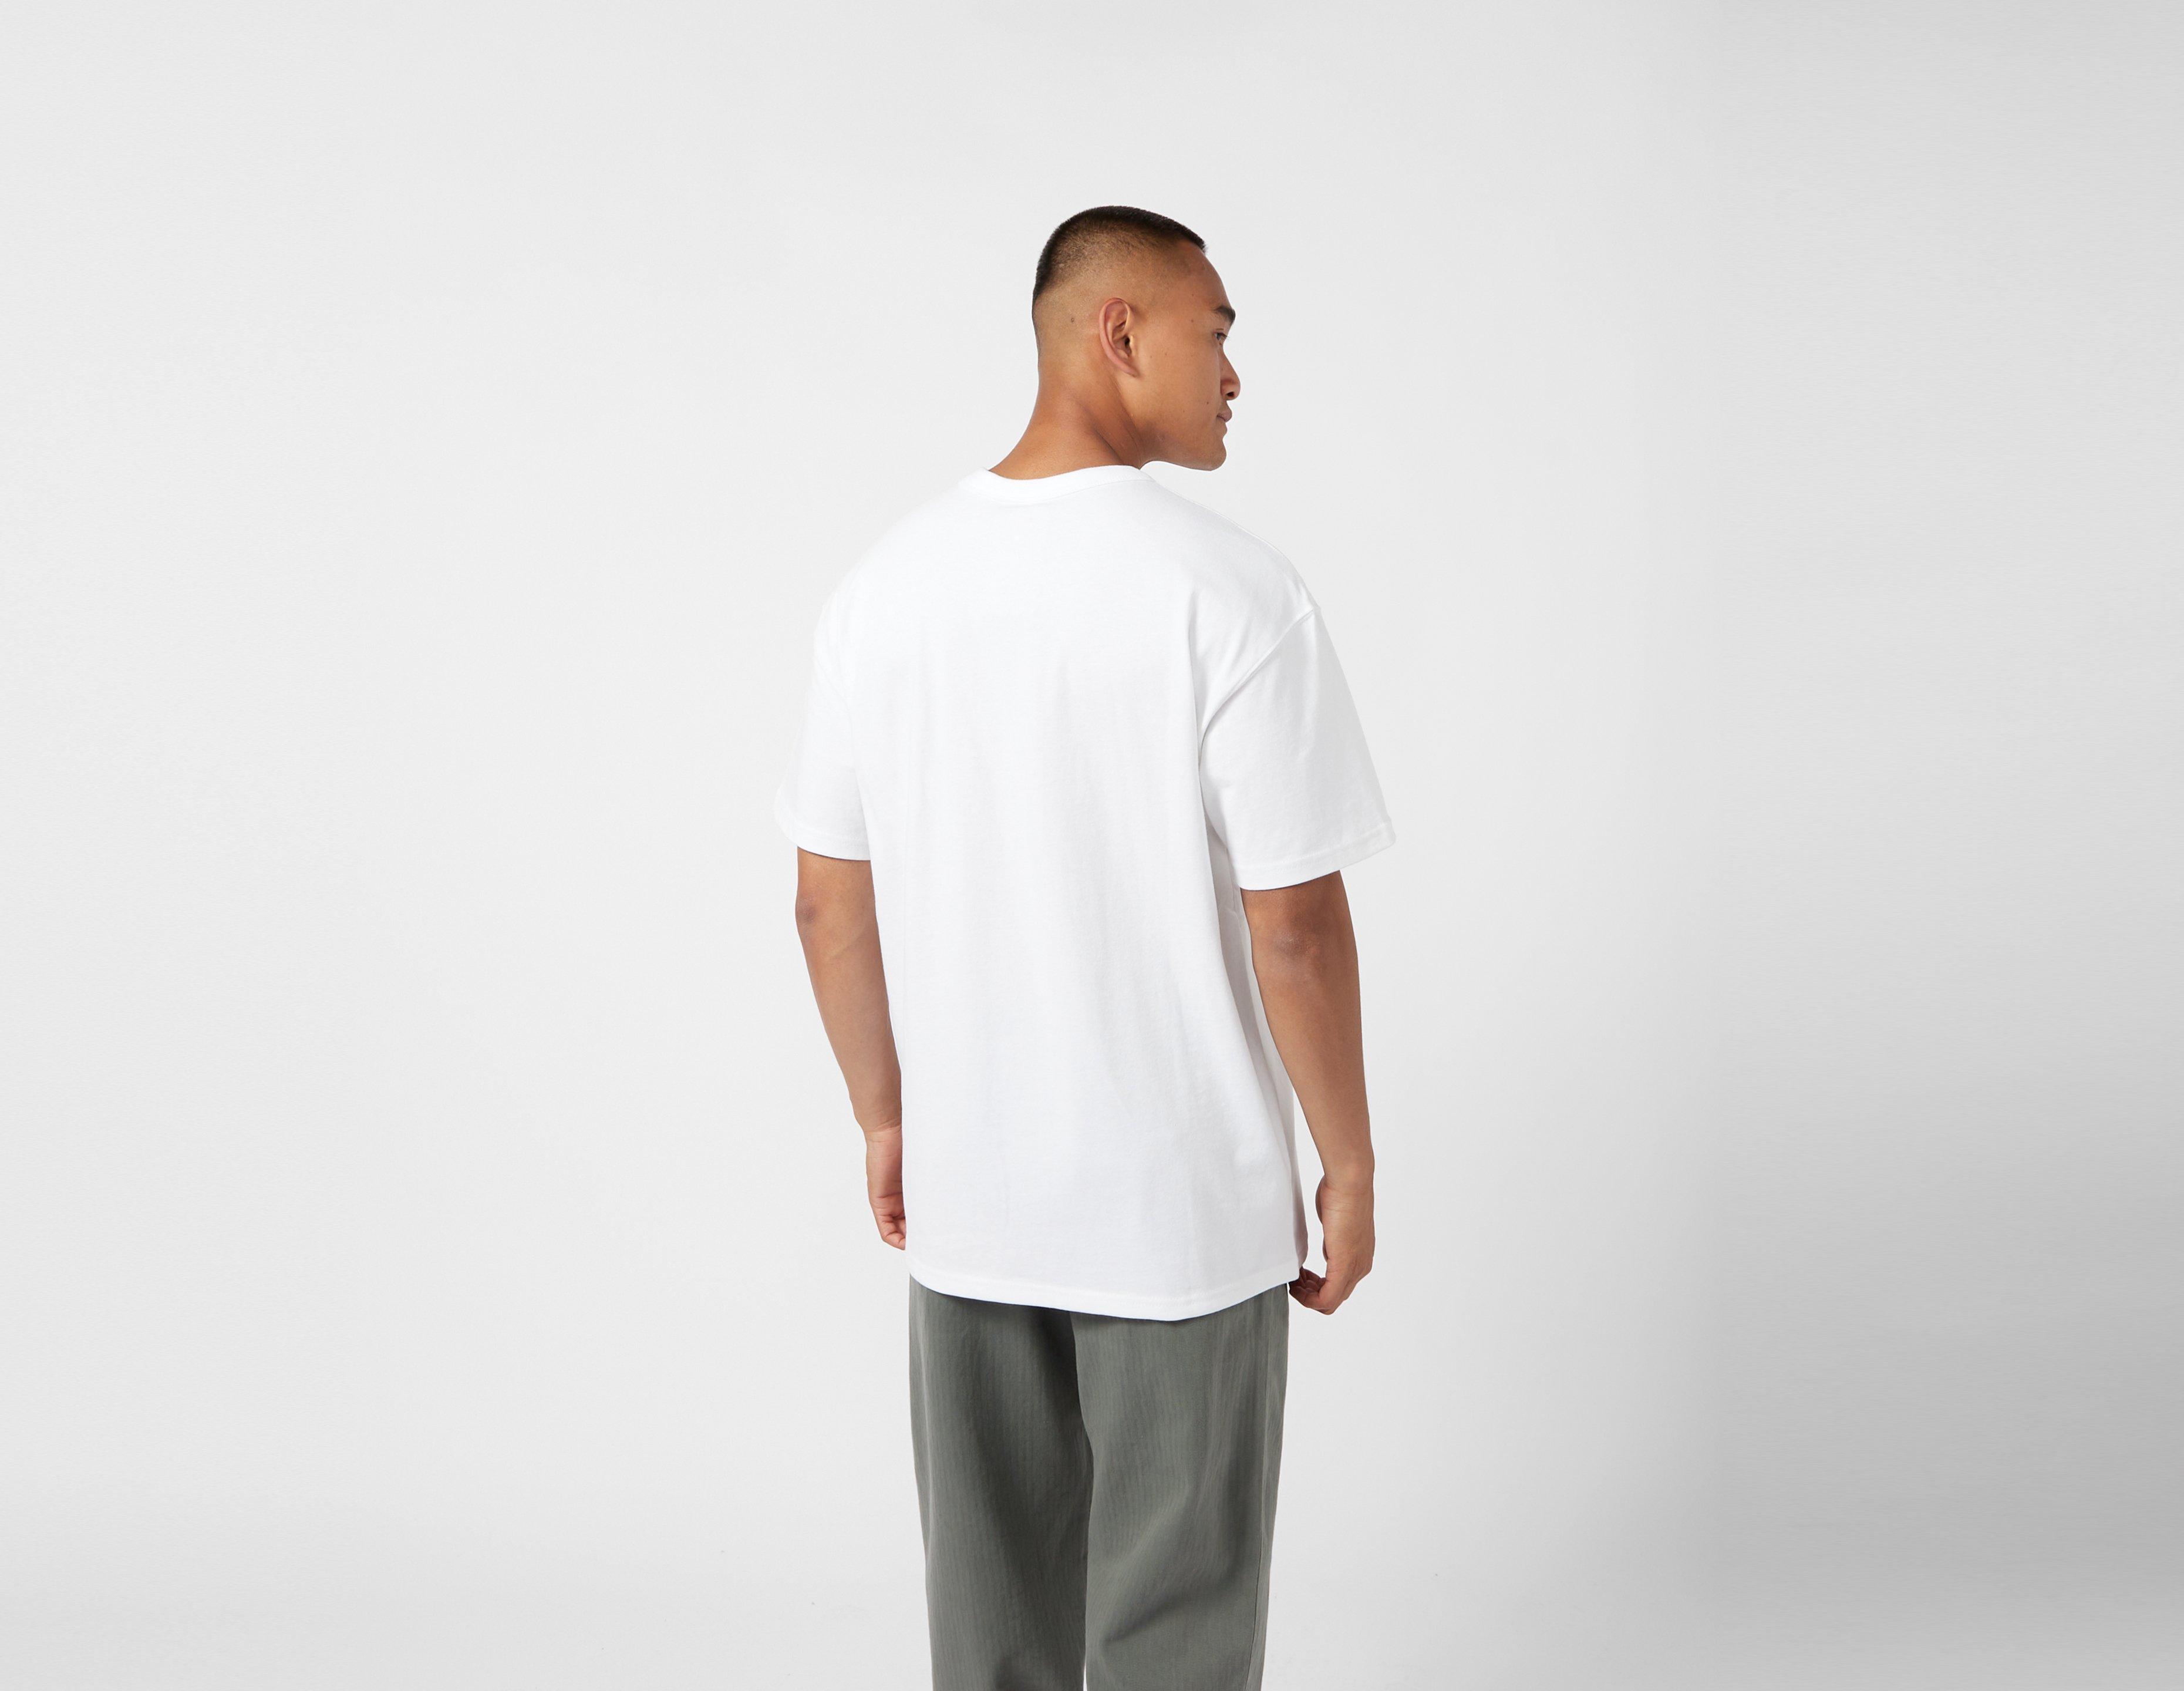 owner by Pocket advantage Essentials | Nike air vapour NSW for T Healthdesign? Premium White nike sale - Shirt -